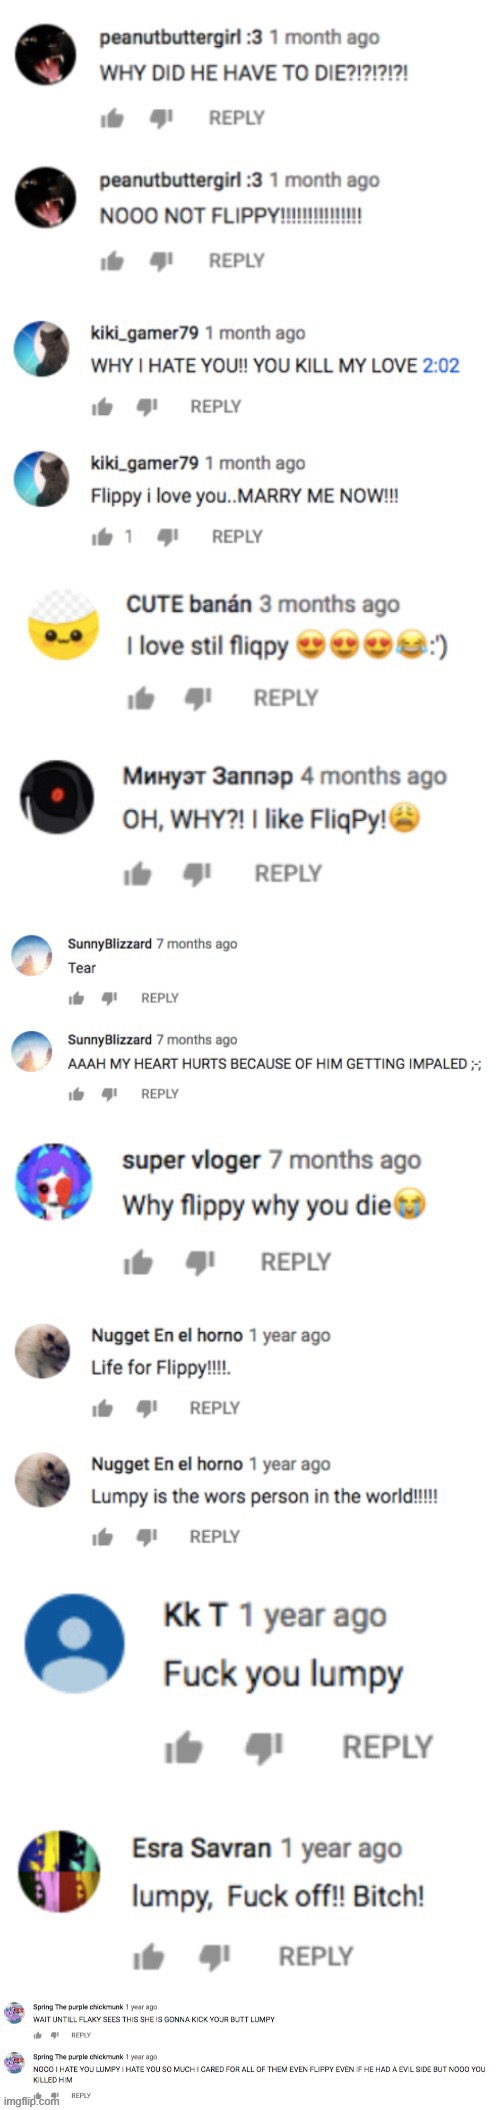 flippy simps not realising flippy is taken | made w/ Imgflip meme maker